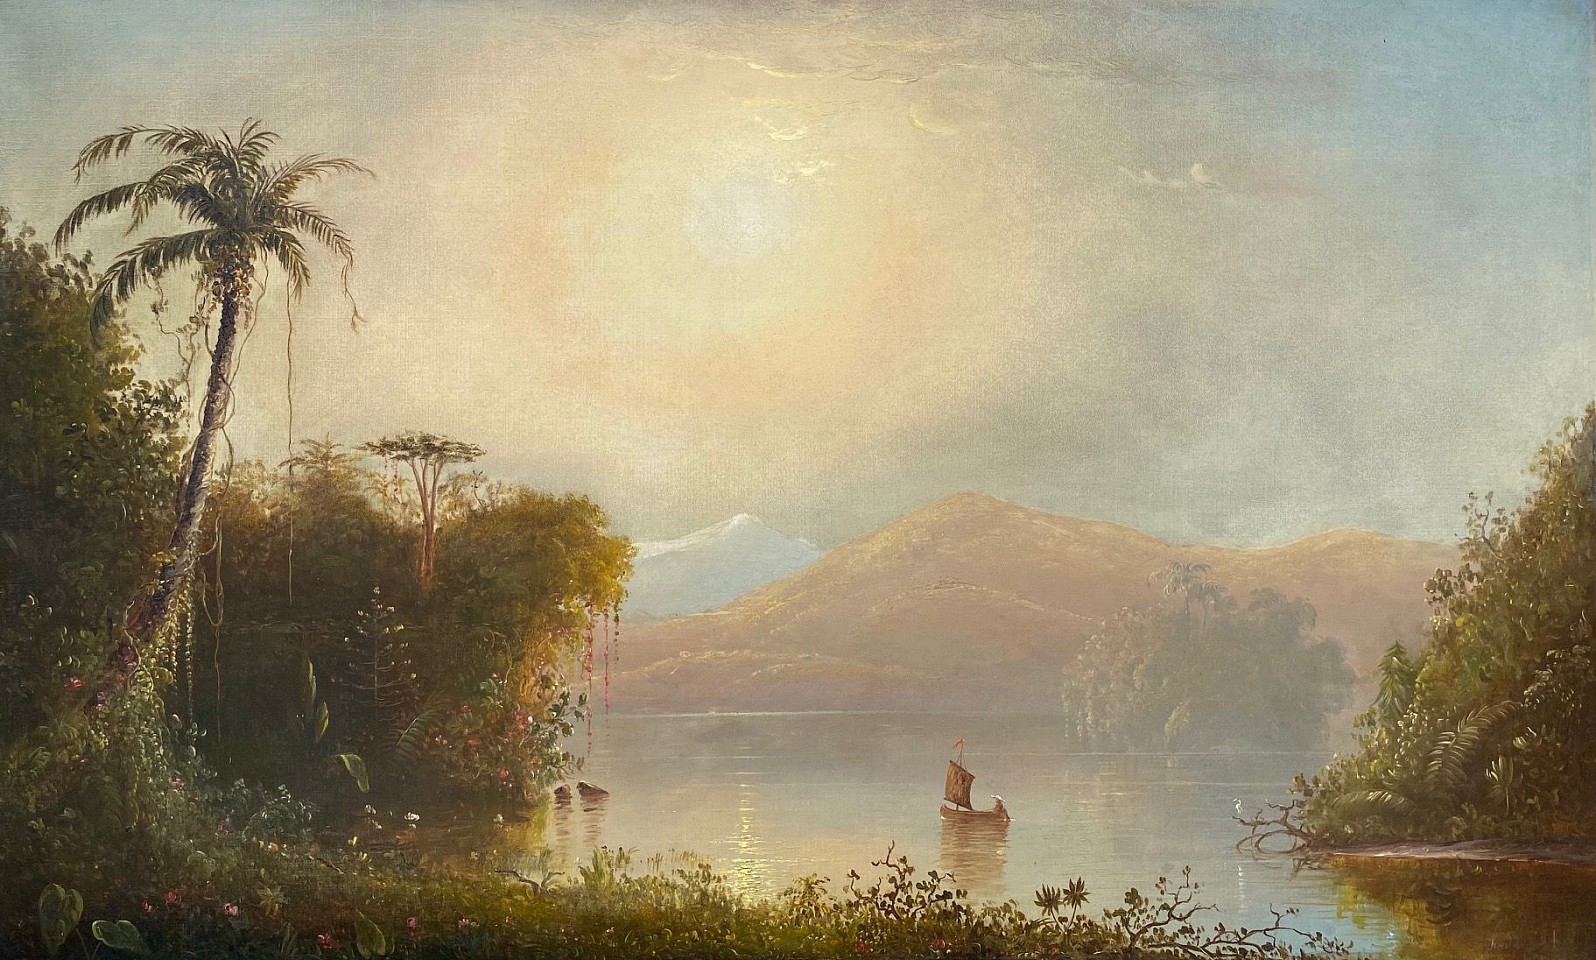 Norton Bush, Sunset in the Tropics, 1878
oil on canvas, 22"" x 36""
JCA 6382
Sold